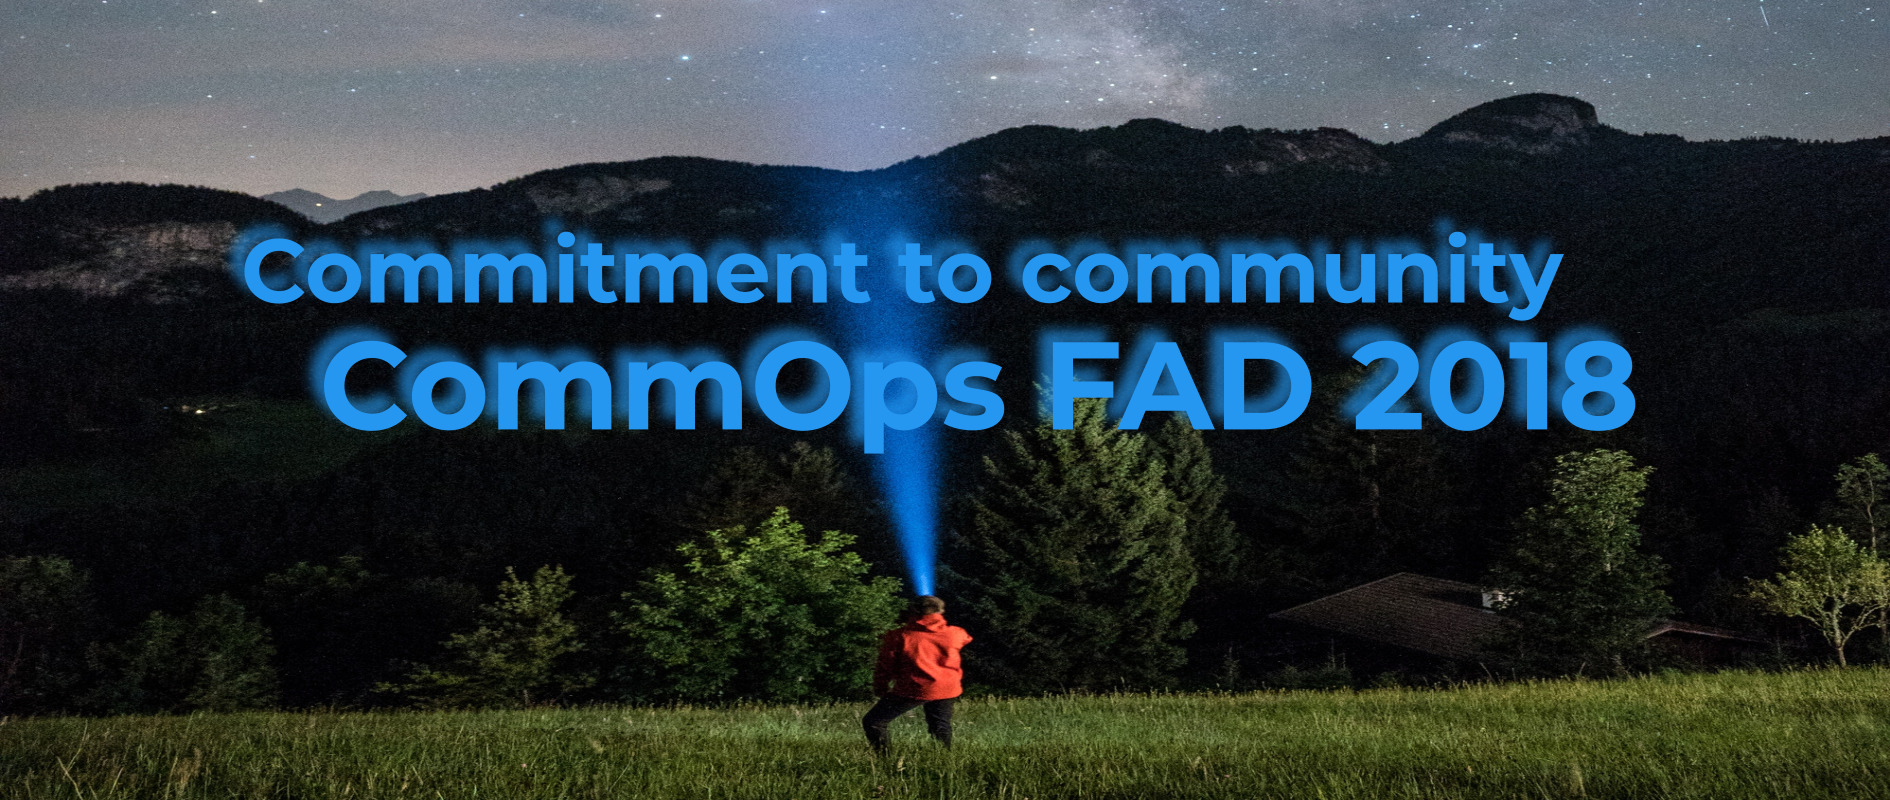 Commitment to community: Fedora CommOps FAD 2018